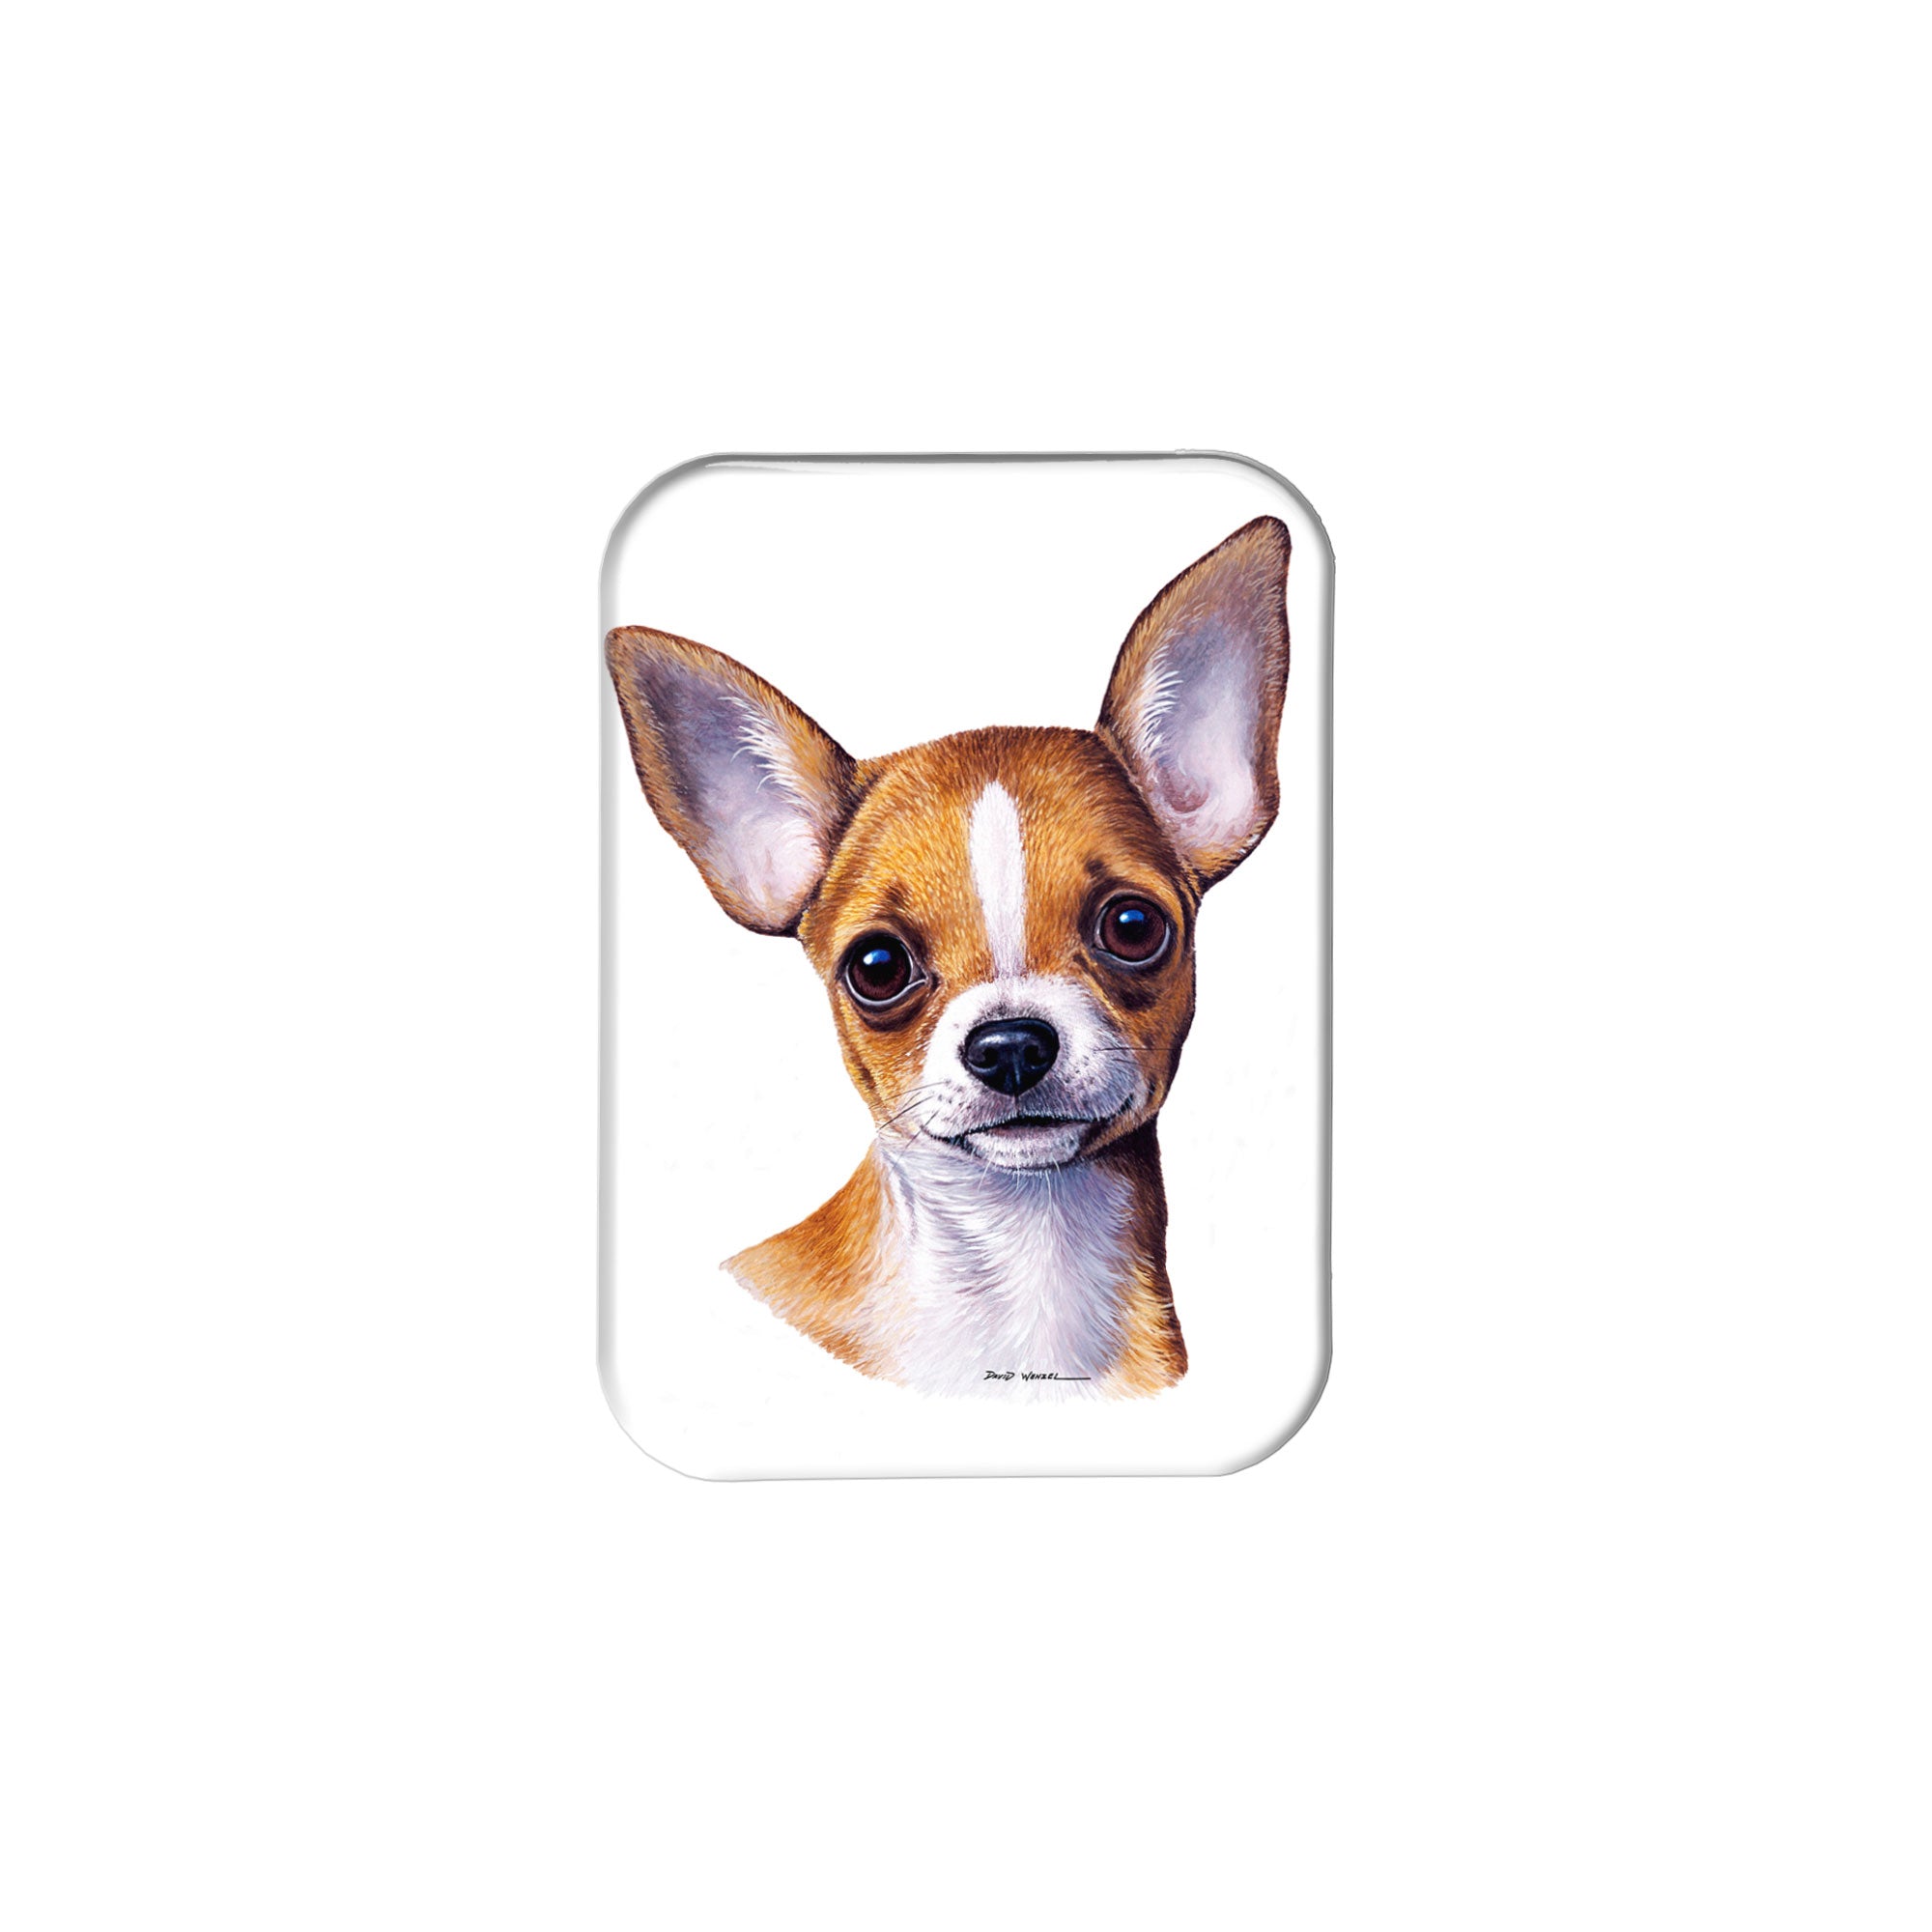 "Chihuahua" - 2.5" X 3.5" Rectangle Fridge Magnets